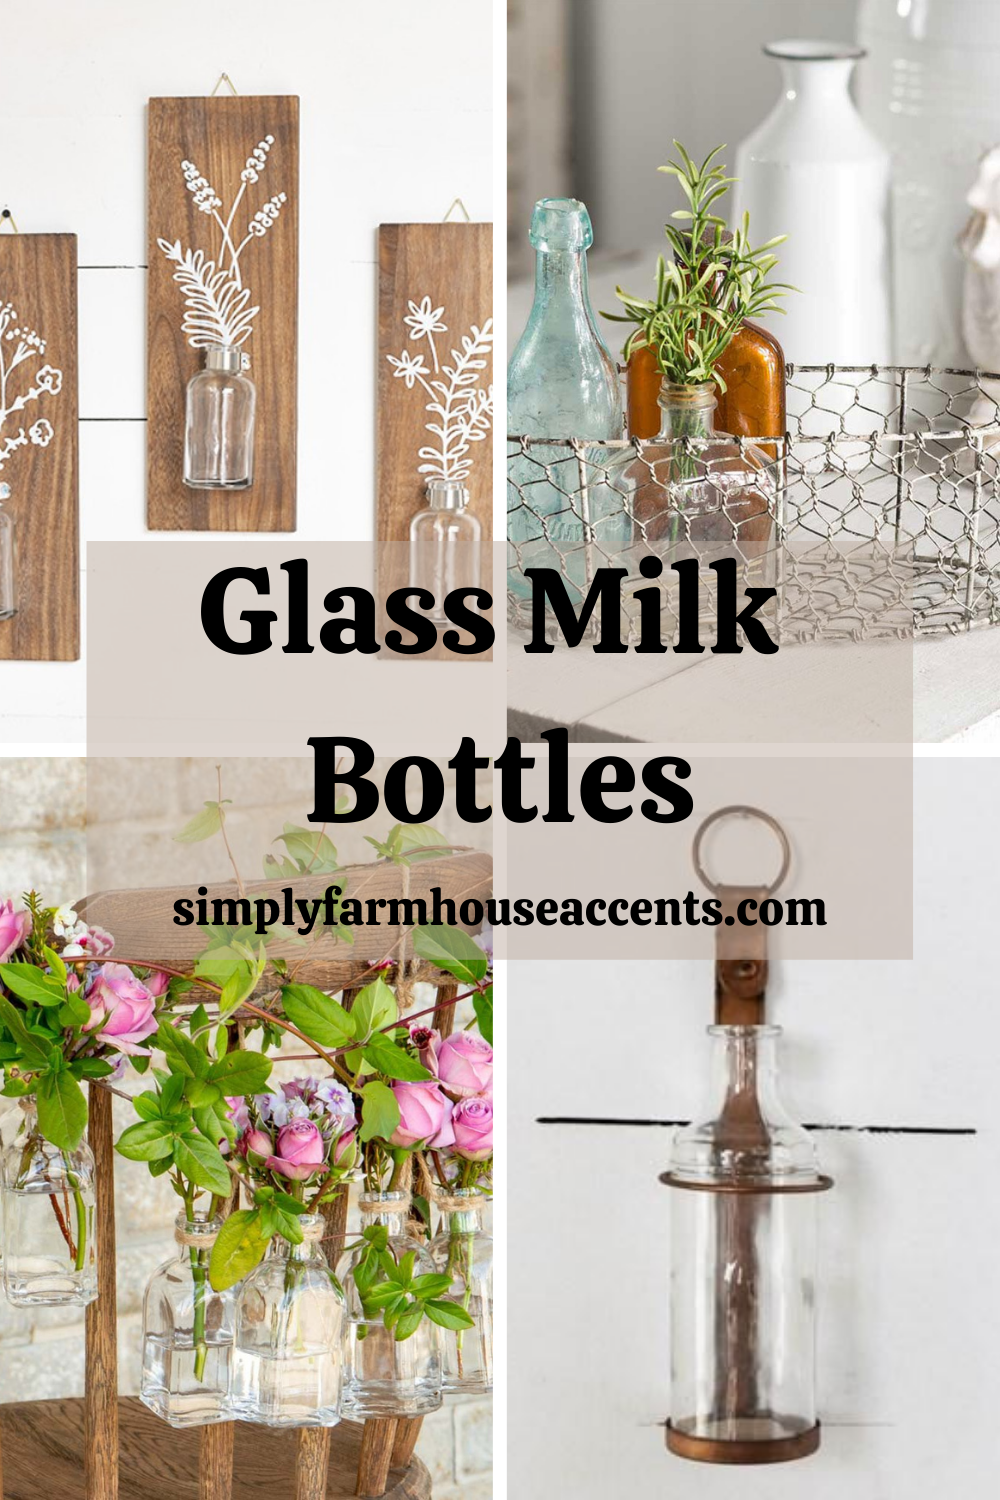 https://simplyfarmhouseaccents.com/wp-content/uploads/2021/05/Glass-Milk-Bottles.png